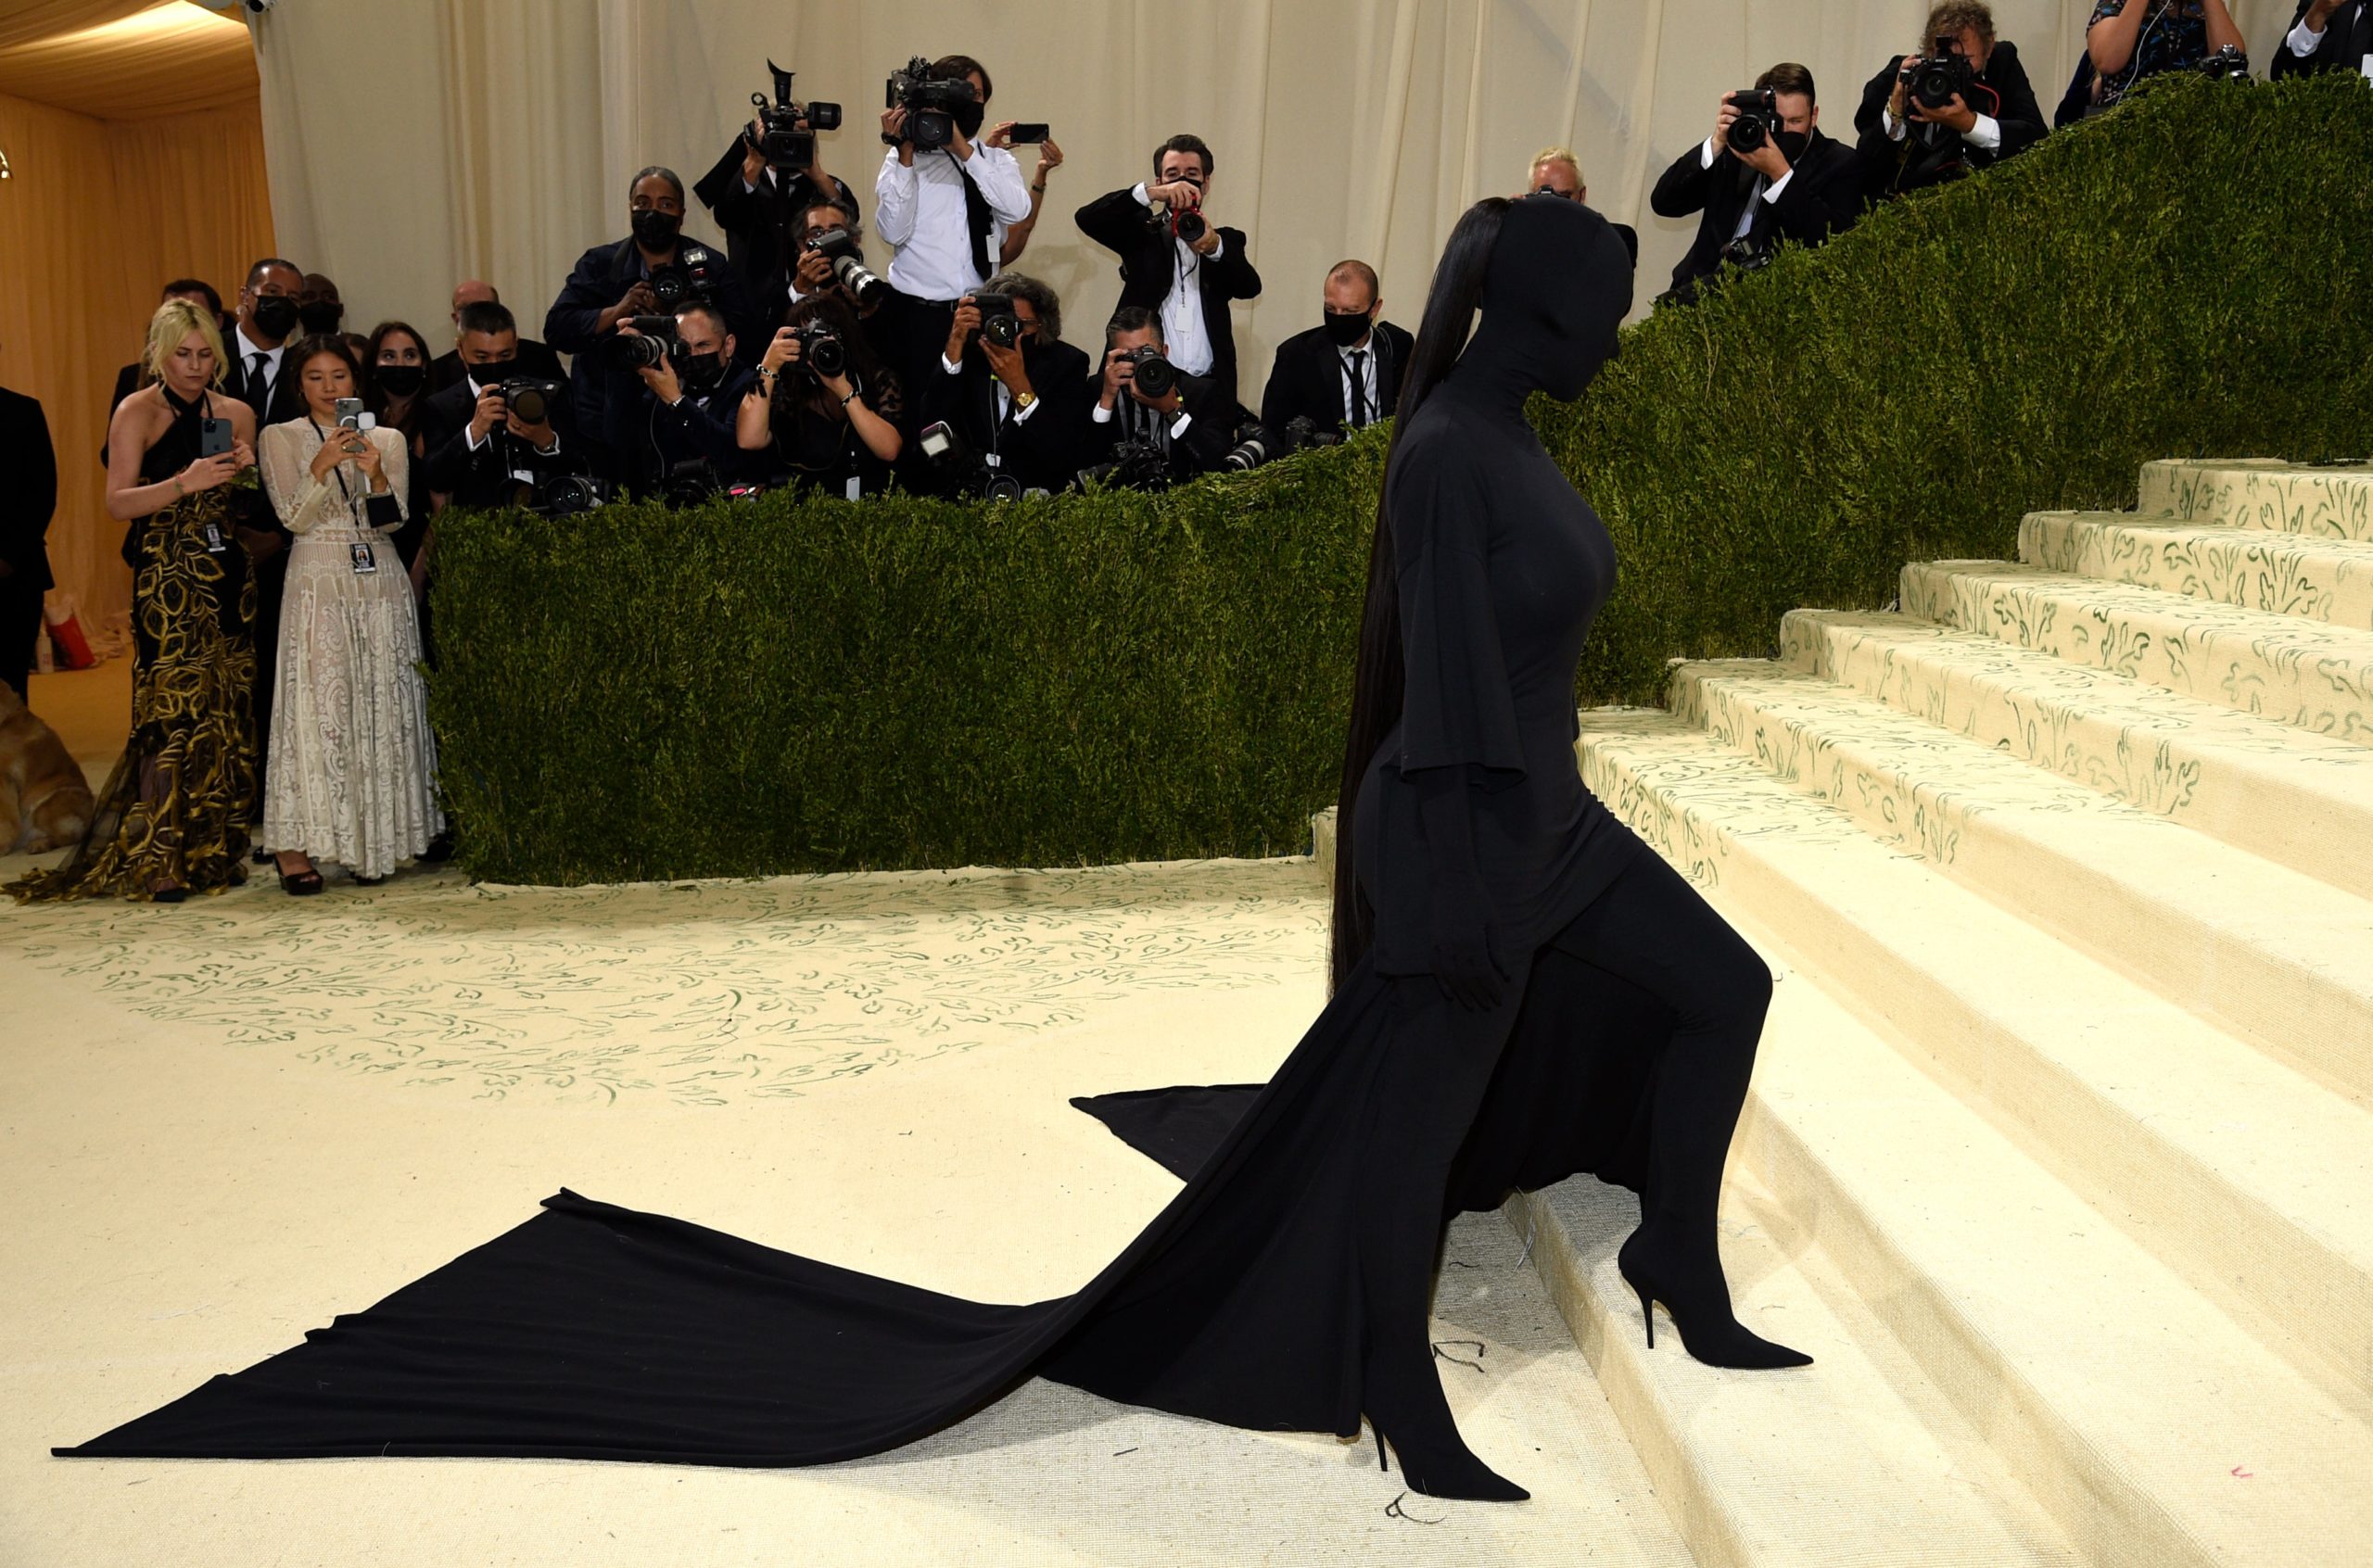 Kim Kardashian’s Bizarre Met Gala Outfit Bas Been Made Into Spooky Costume For This Halloween Season